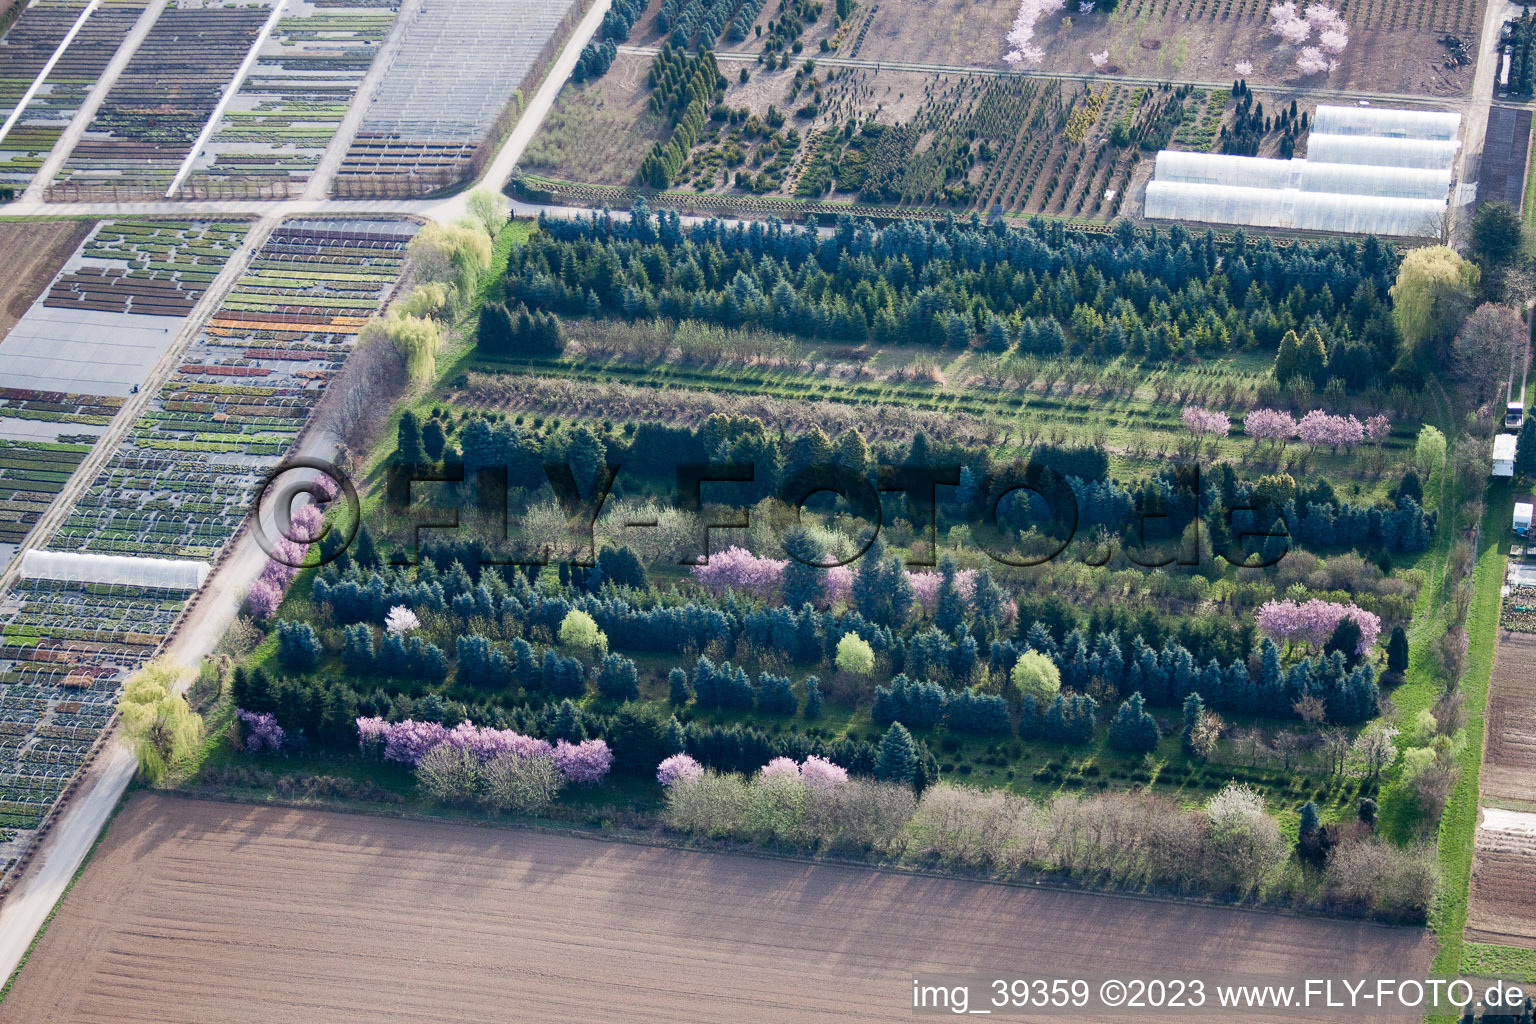 Bird's eye view of Häussermann perennials + trees, in the cornfield in Möglingen in the state Baden-Wuerttemberg, Germany